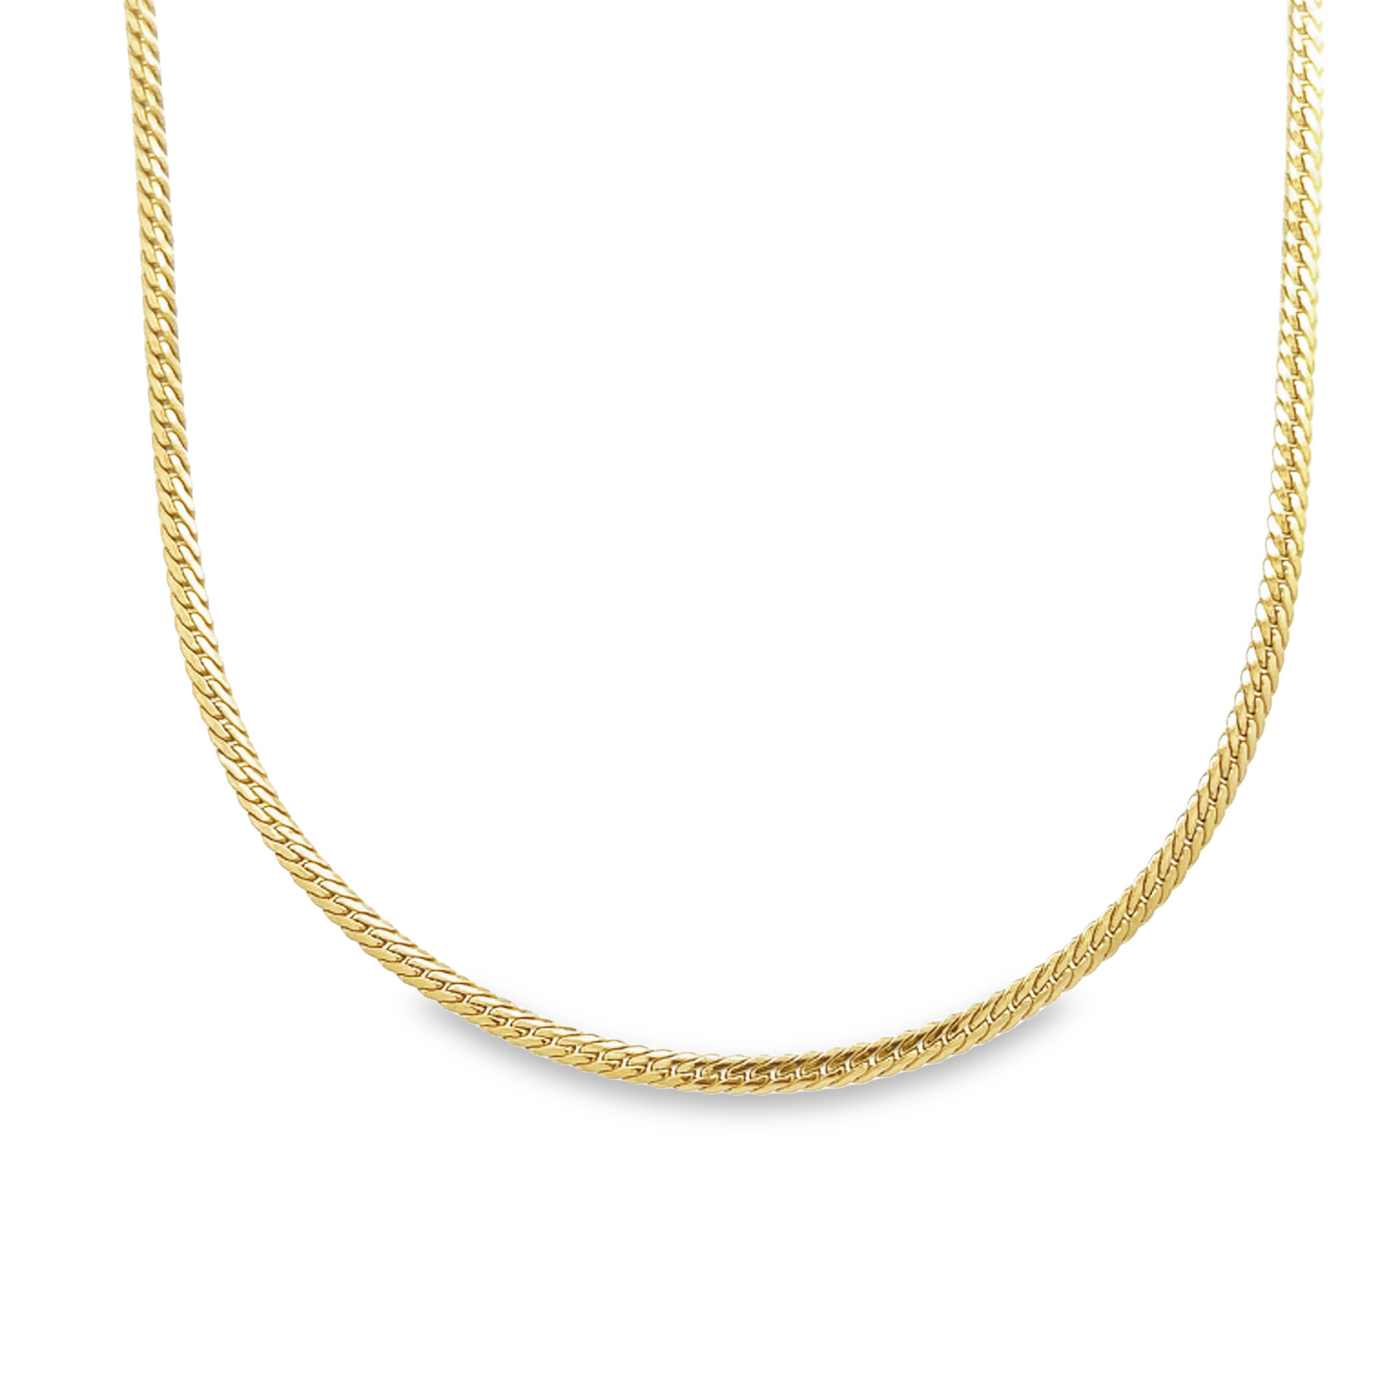 10 Karat Yellow Gold Flat Curb 3mm Link Necklace